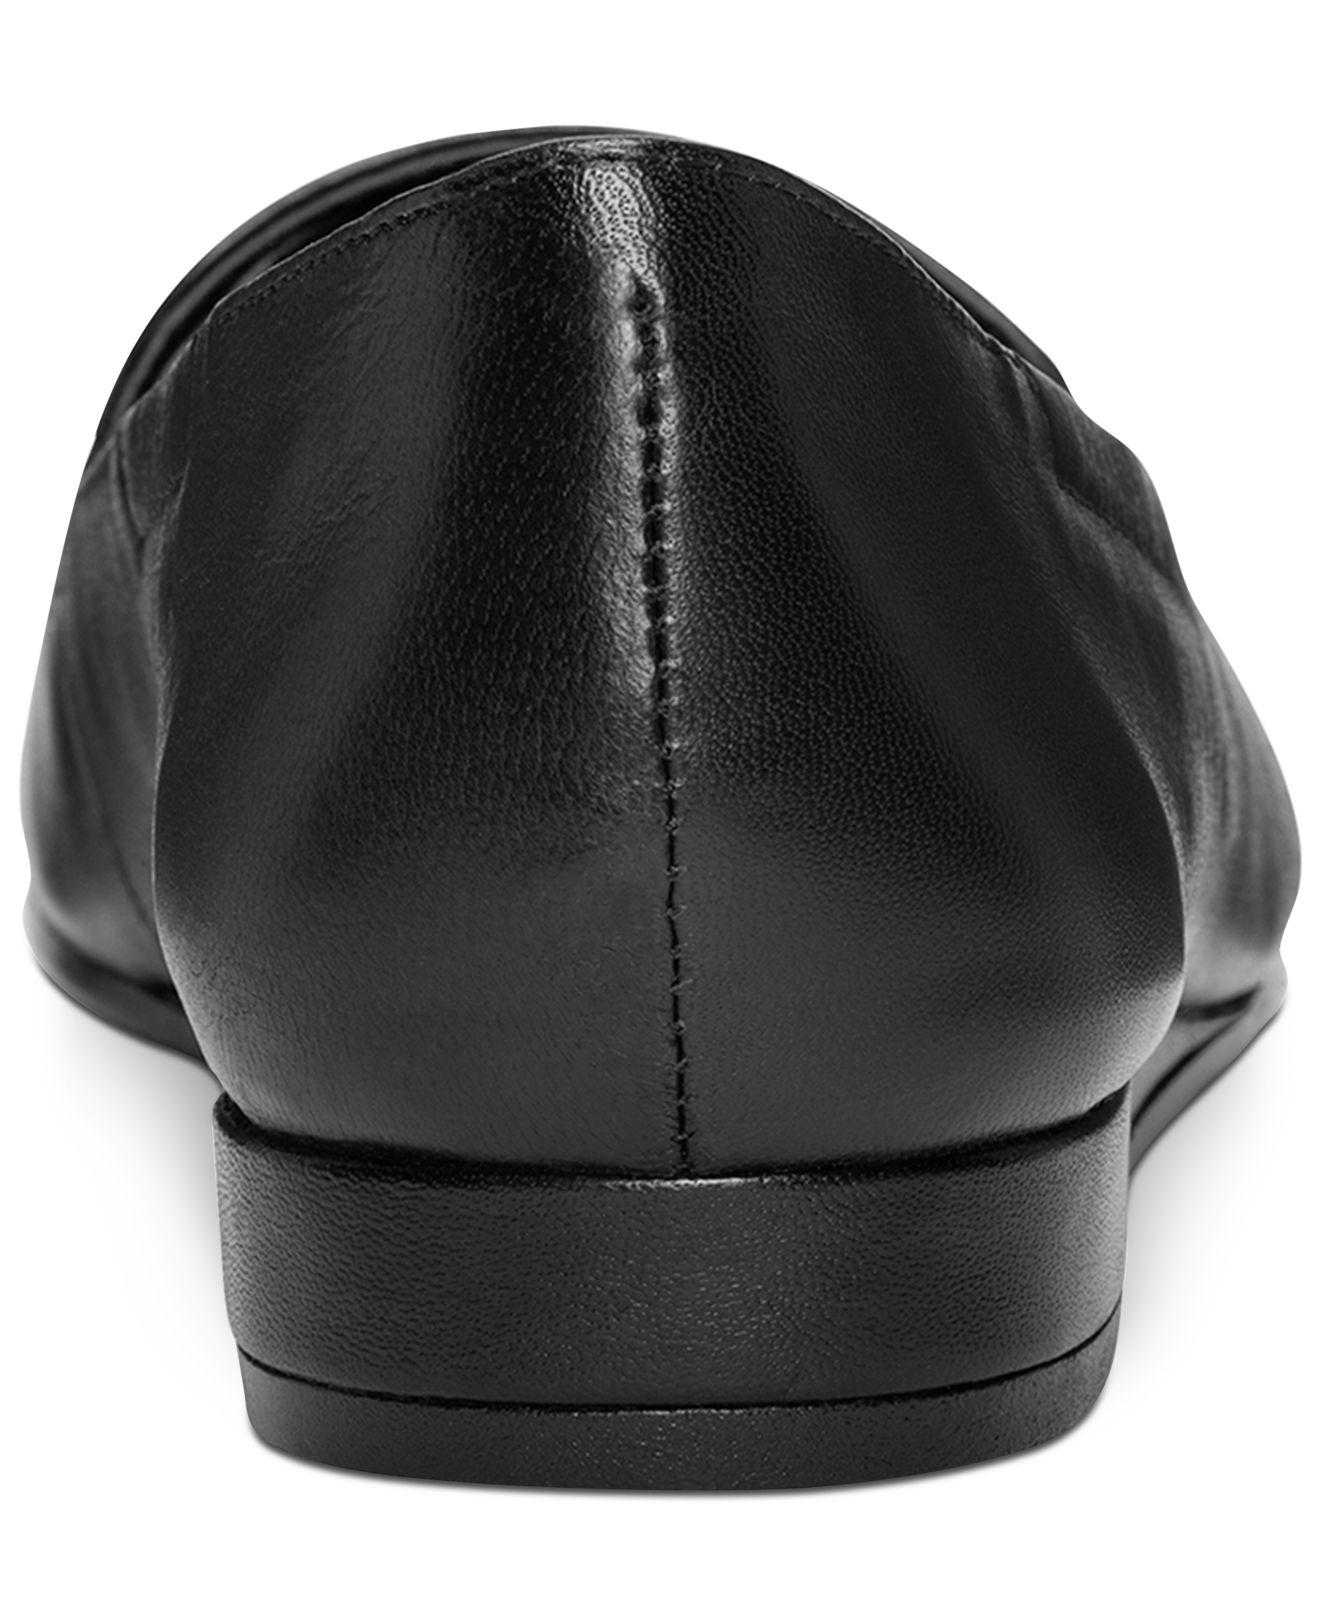 Aerosoles Leather Tidbit Peep-toe Flats in Black Leather (Black) - Lyst